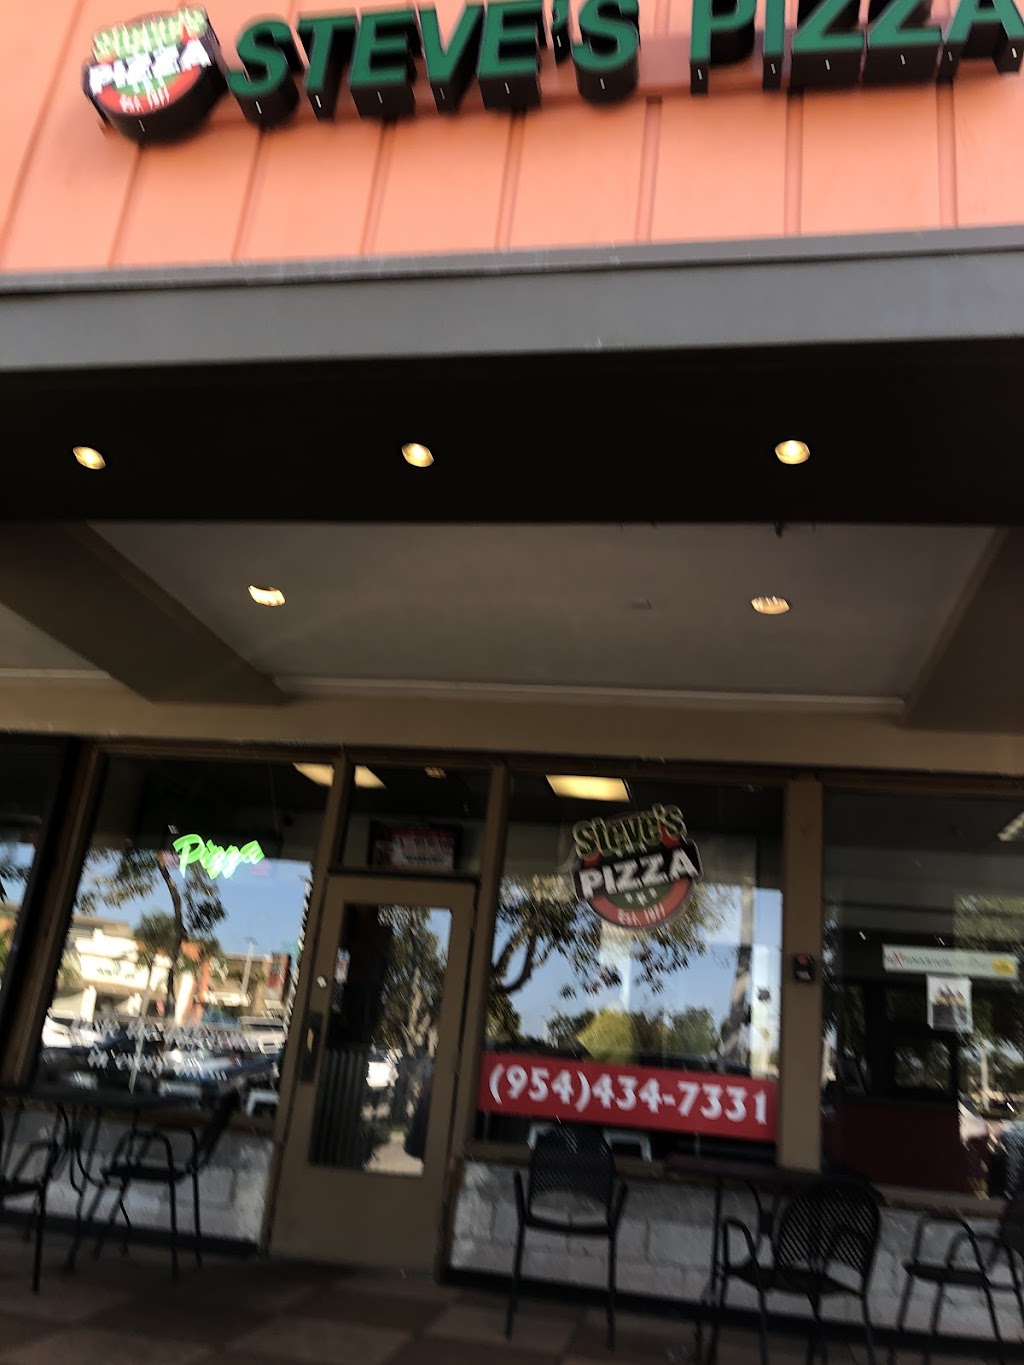 Steves Pizza | 5866 S Flamingo Rd, Cooper City, FL 33330, USA | Phone: (954) 434-7331